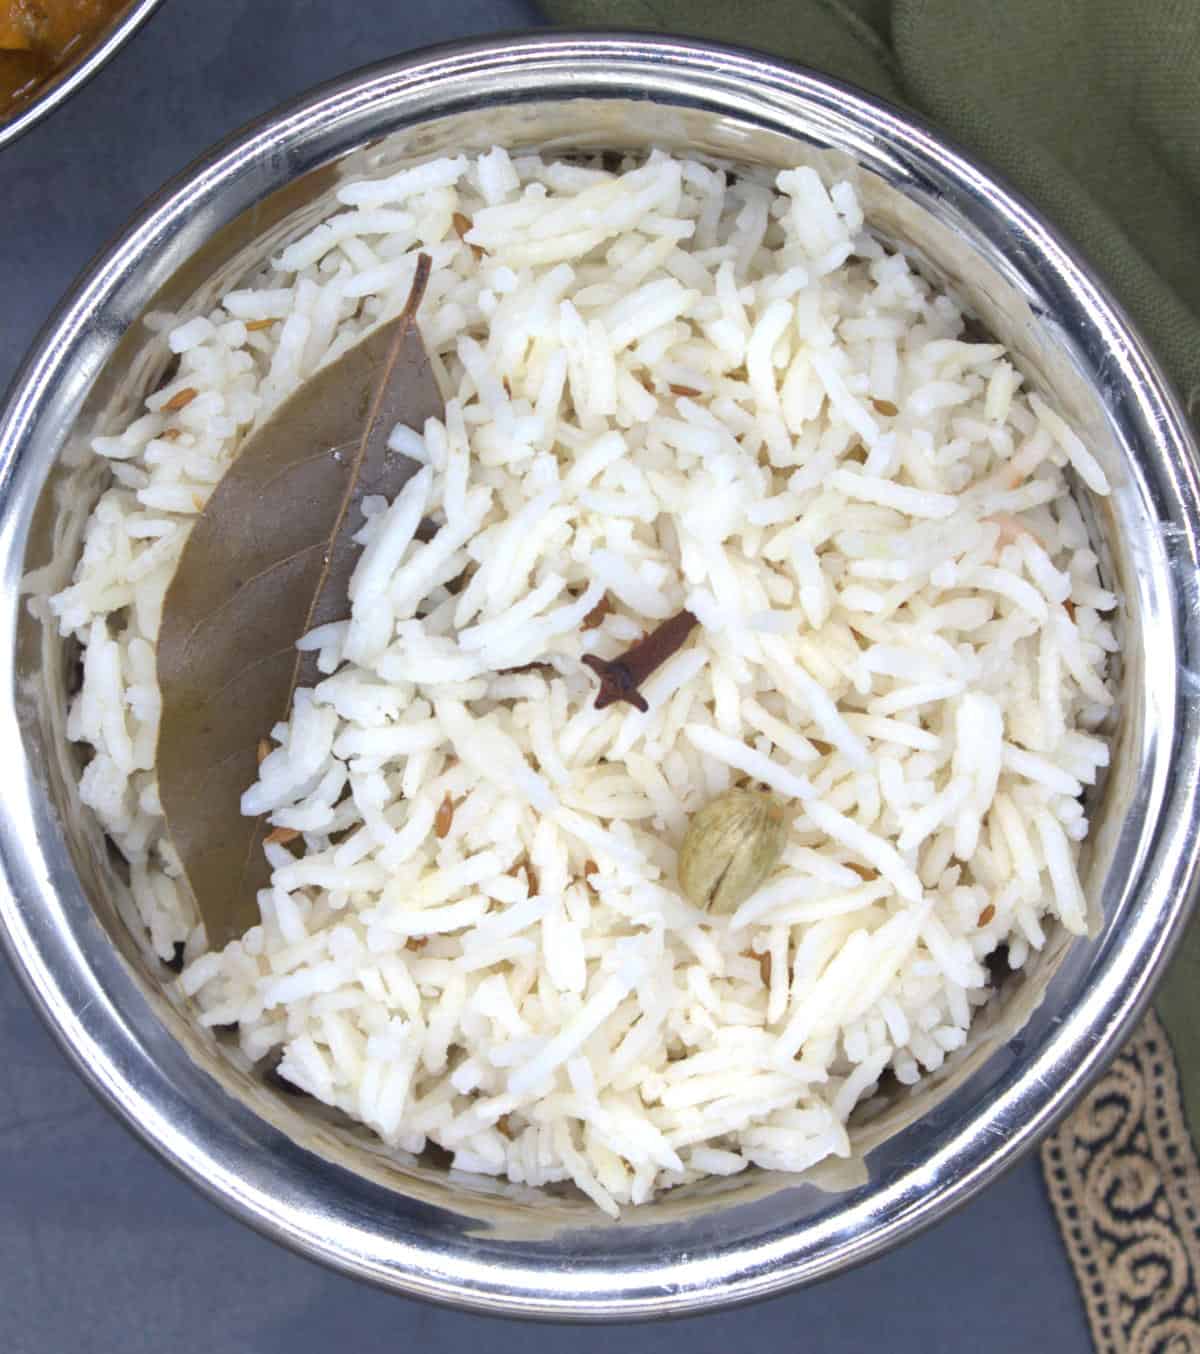 Photo of Indian jeera rice or cumin rice in bowl.